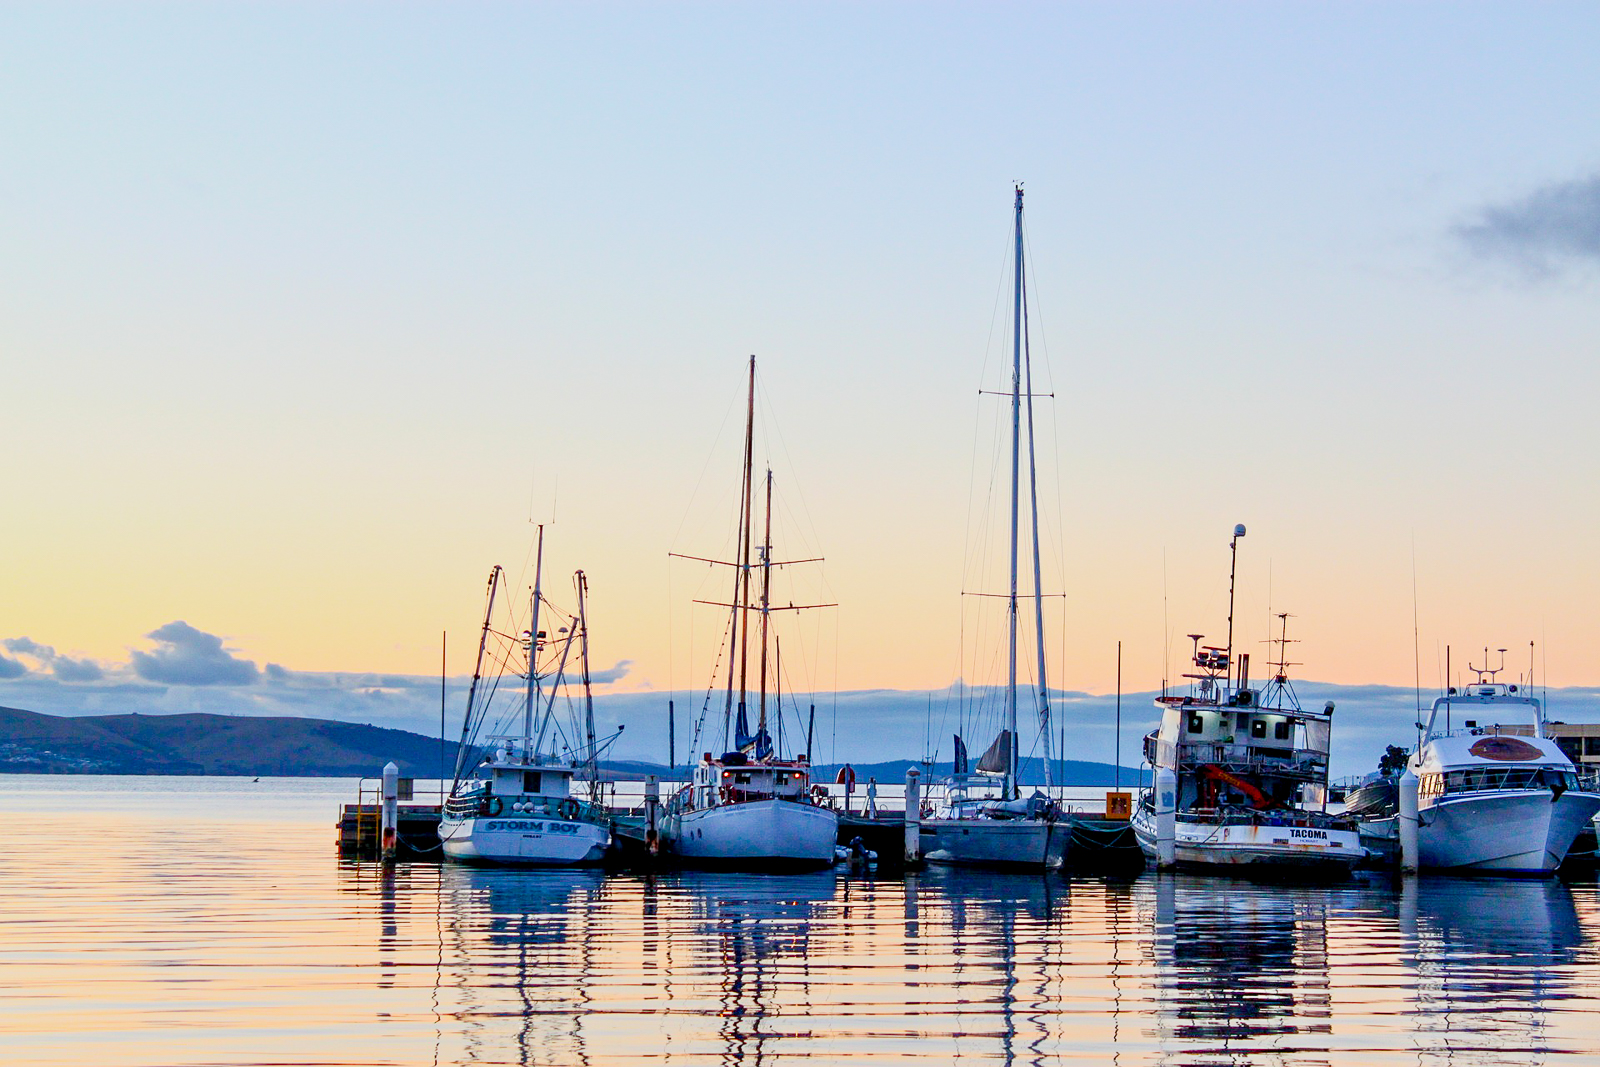 Boats in Hobart port